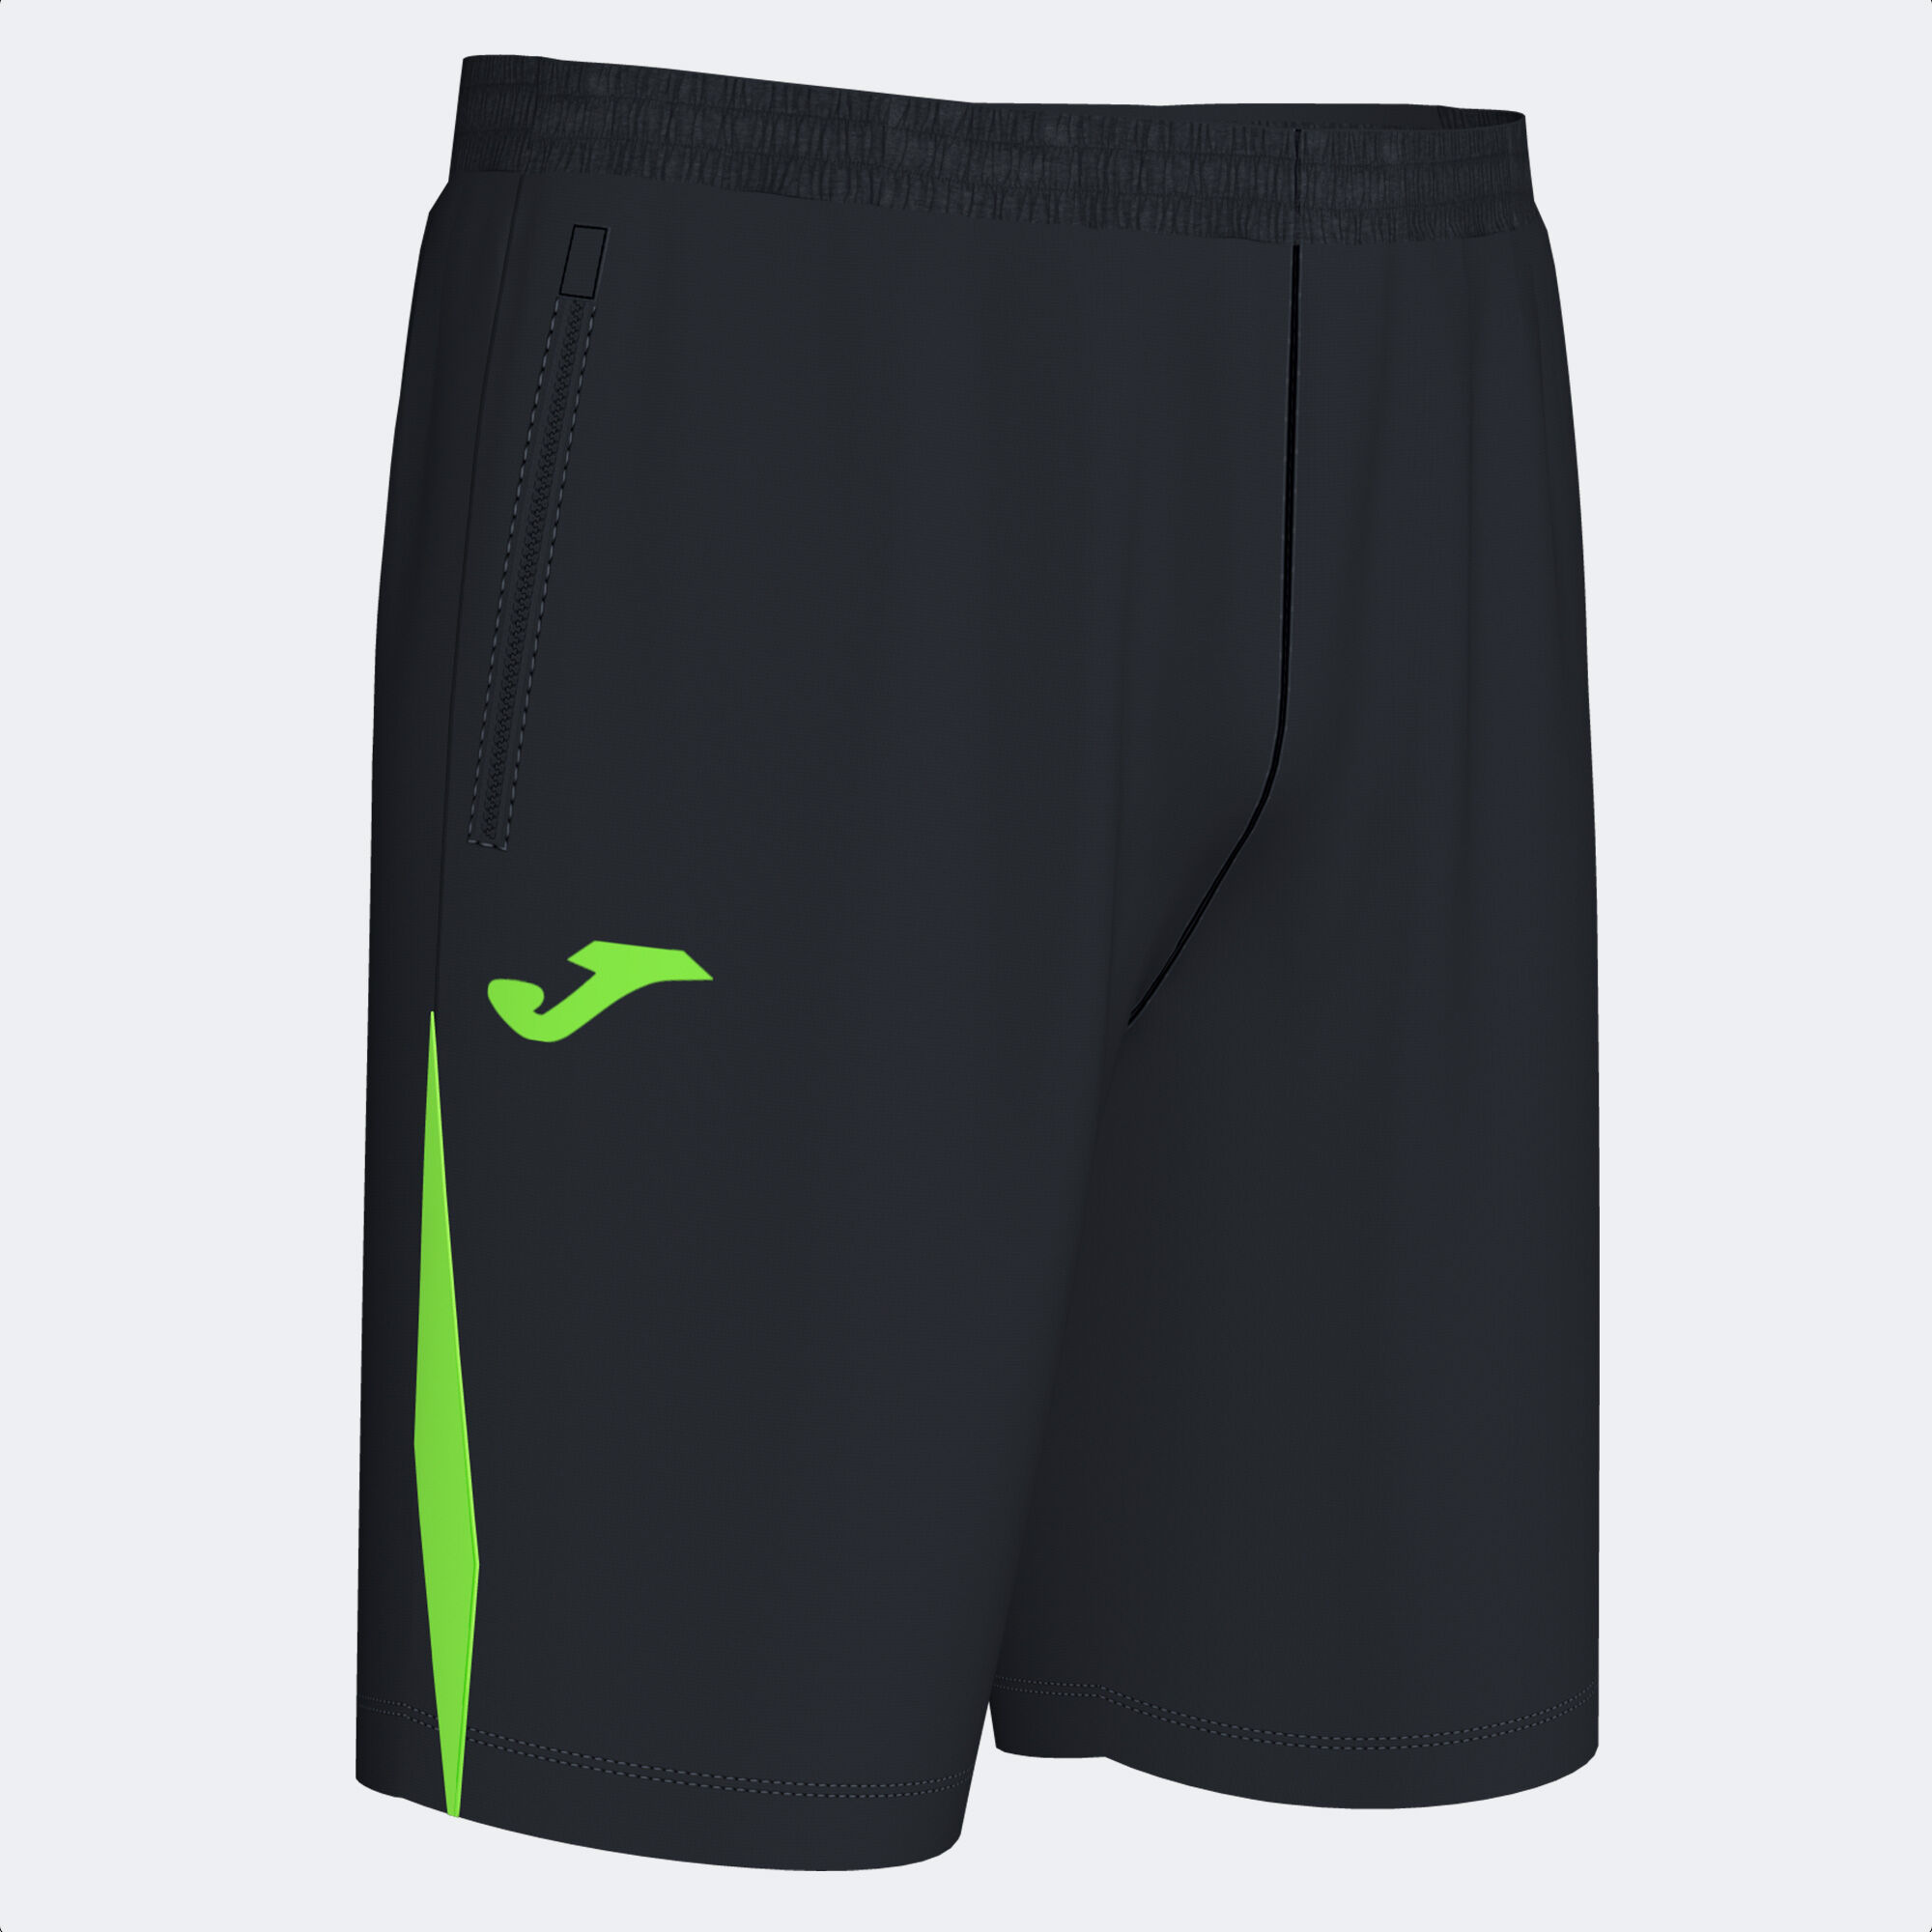 Bermuda shorts man Championship VII black fluorescent green